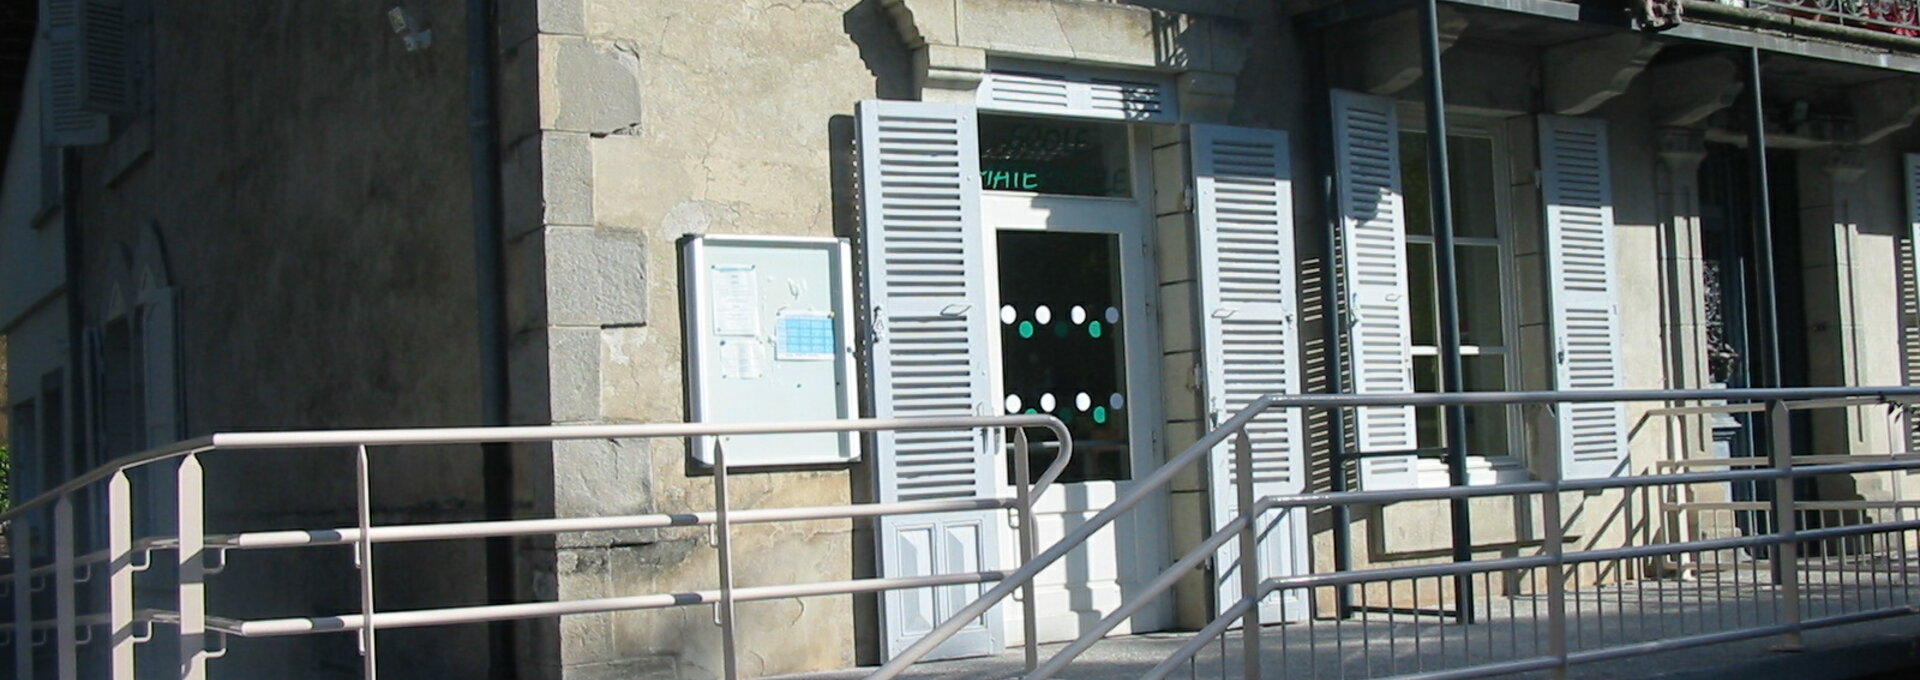 Ecole Maternelle Primaire Garderie Enseignantes Cantal